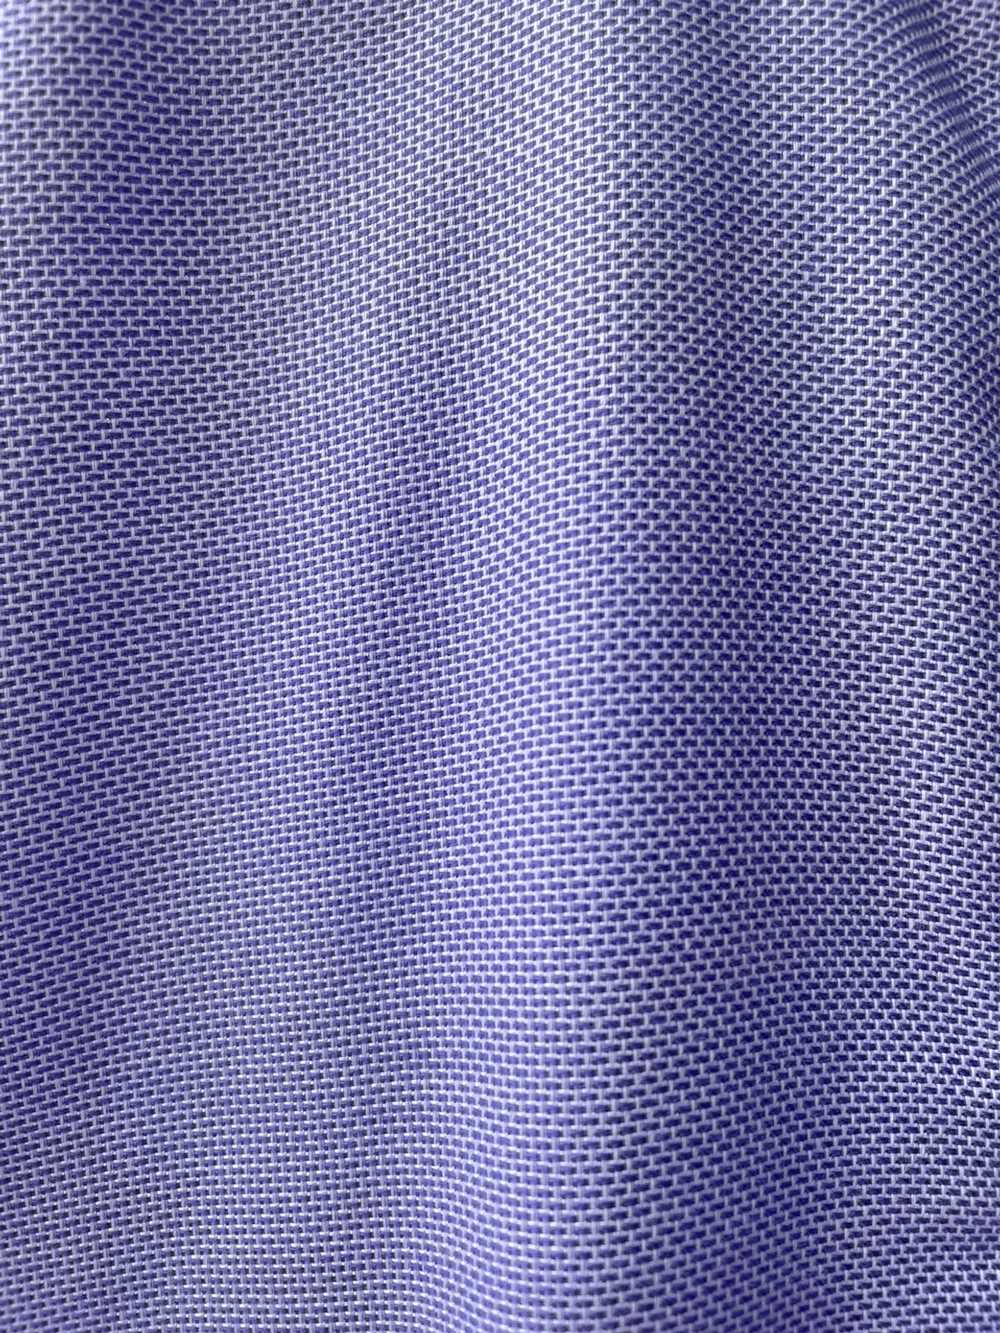 Hugo Boss Hugo Boss purple pattern dress shirt - image 1